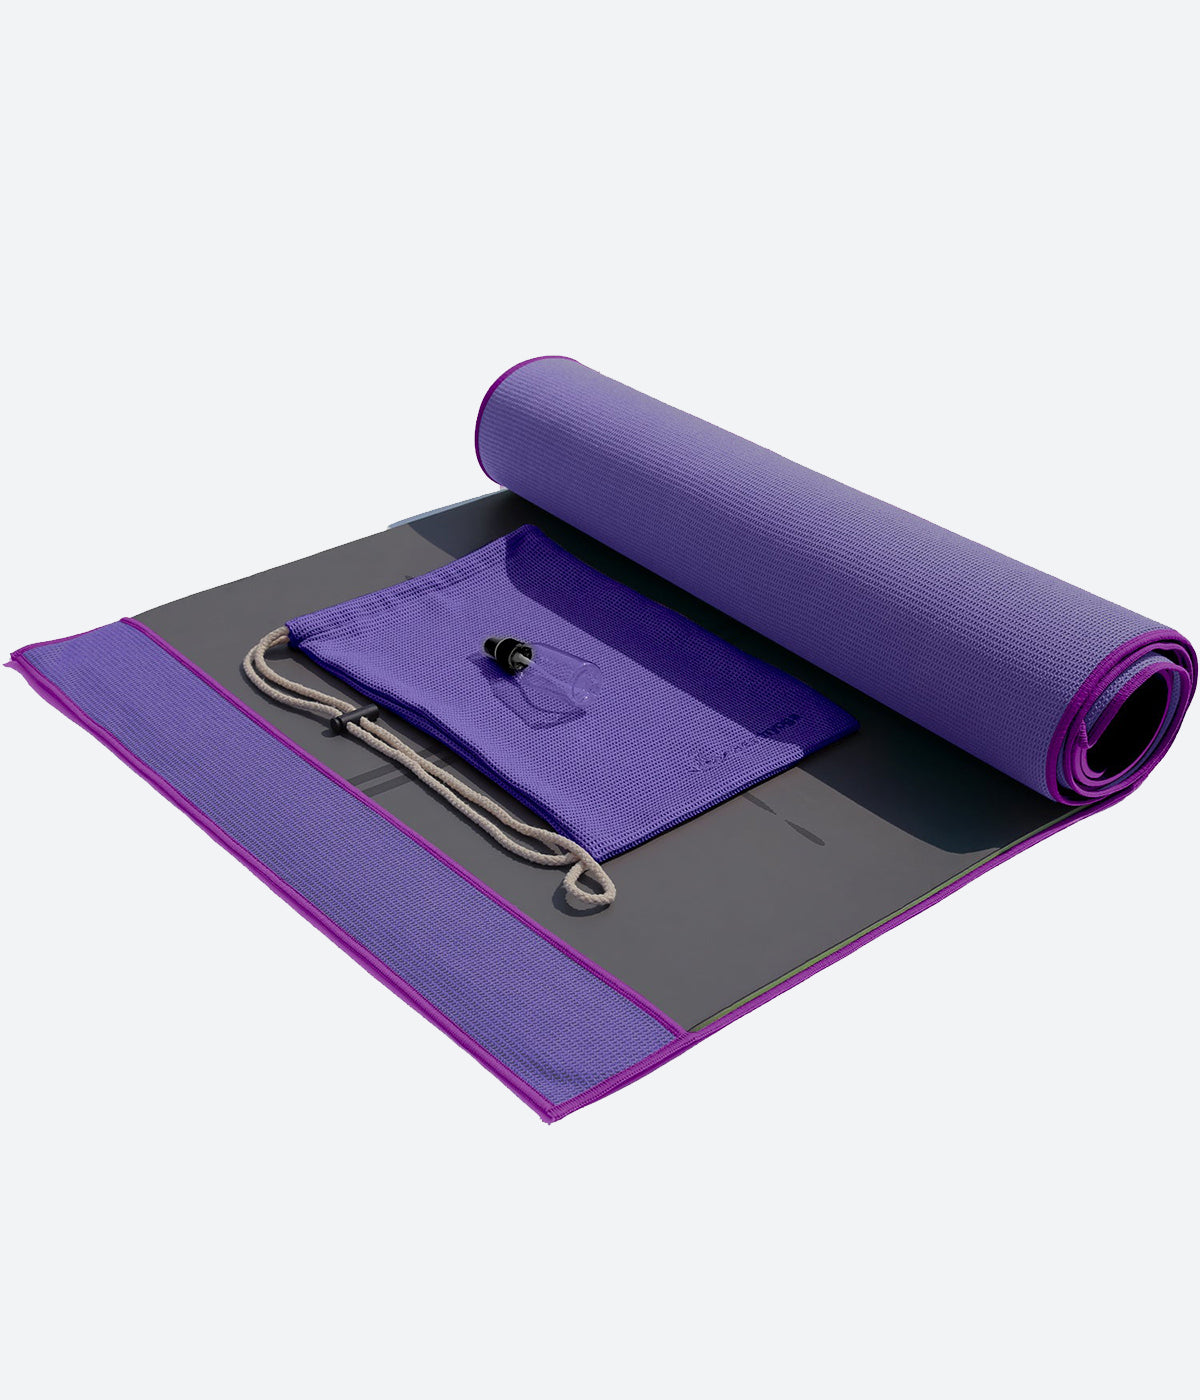 Pilates Yoga Towel, Microfiber Silicone Layer